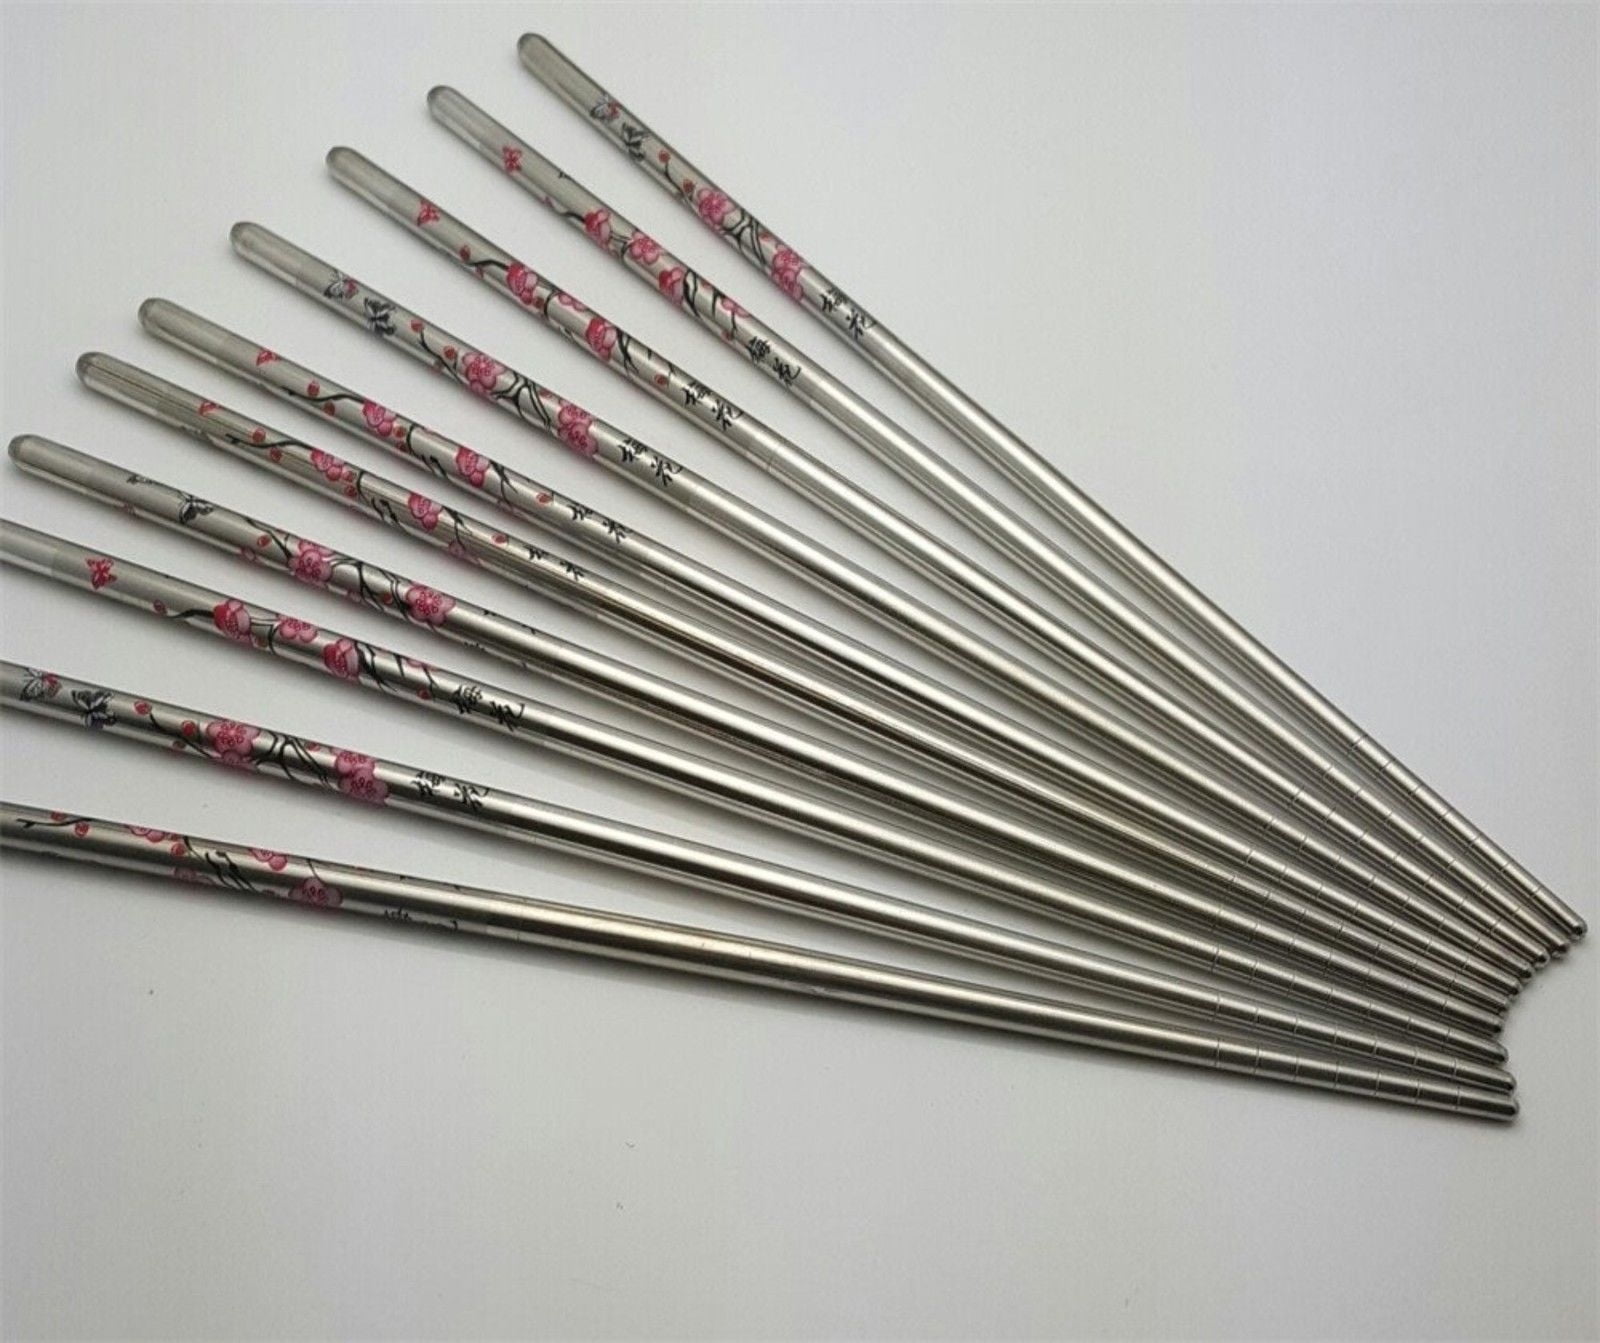 Metal Stainless Steel Chopsticks Spiral Threaded CHOP Sticks 5 Pairs/set 2 Set for sale online 